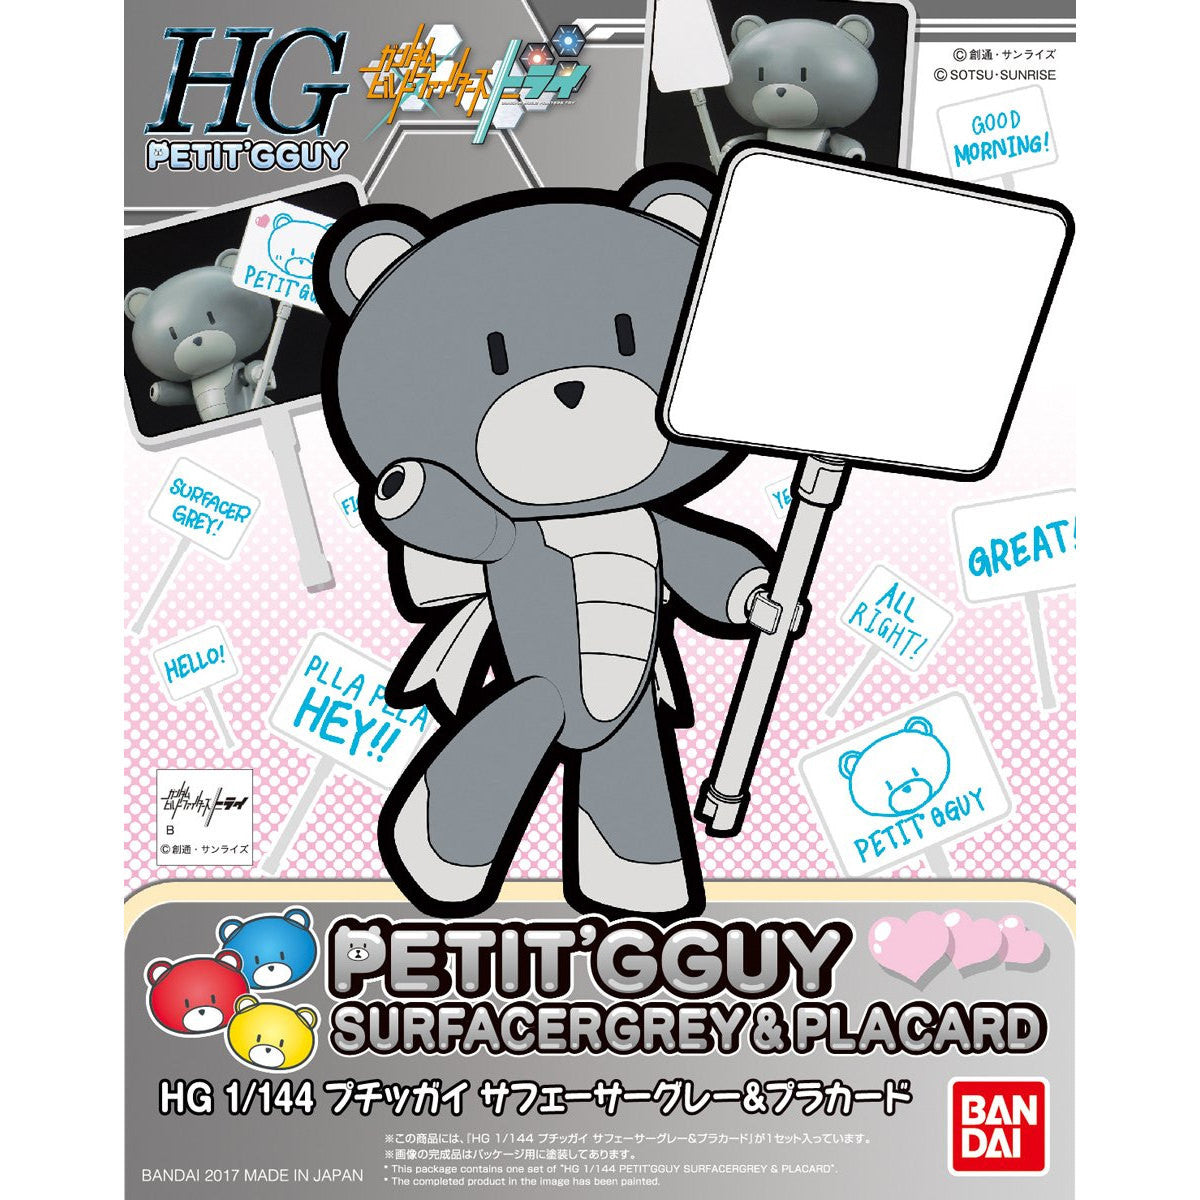 HGPG Petitgguy Surfacer Gray & Placard